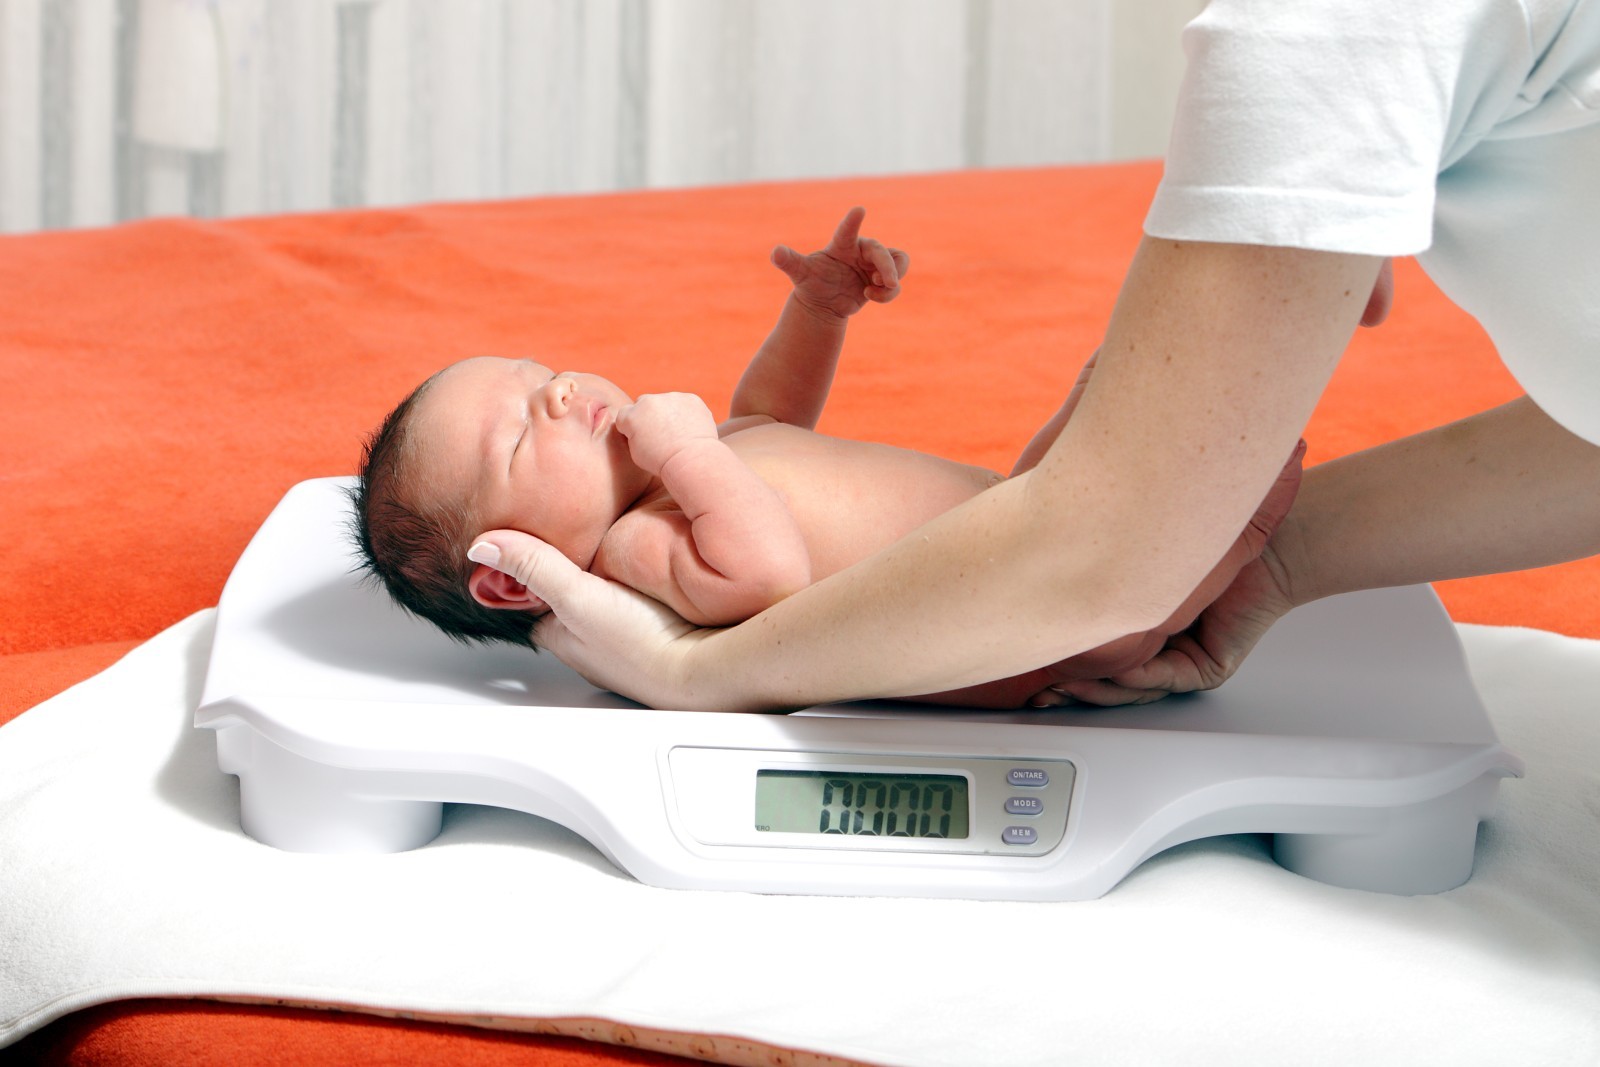 scaderea in greutate la nou nascuti)